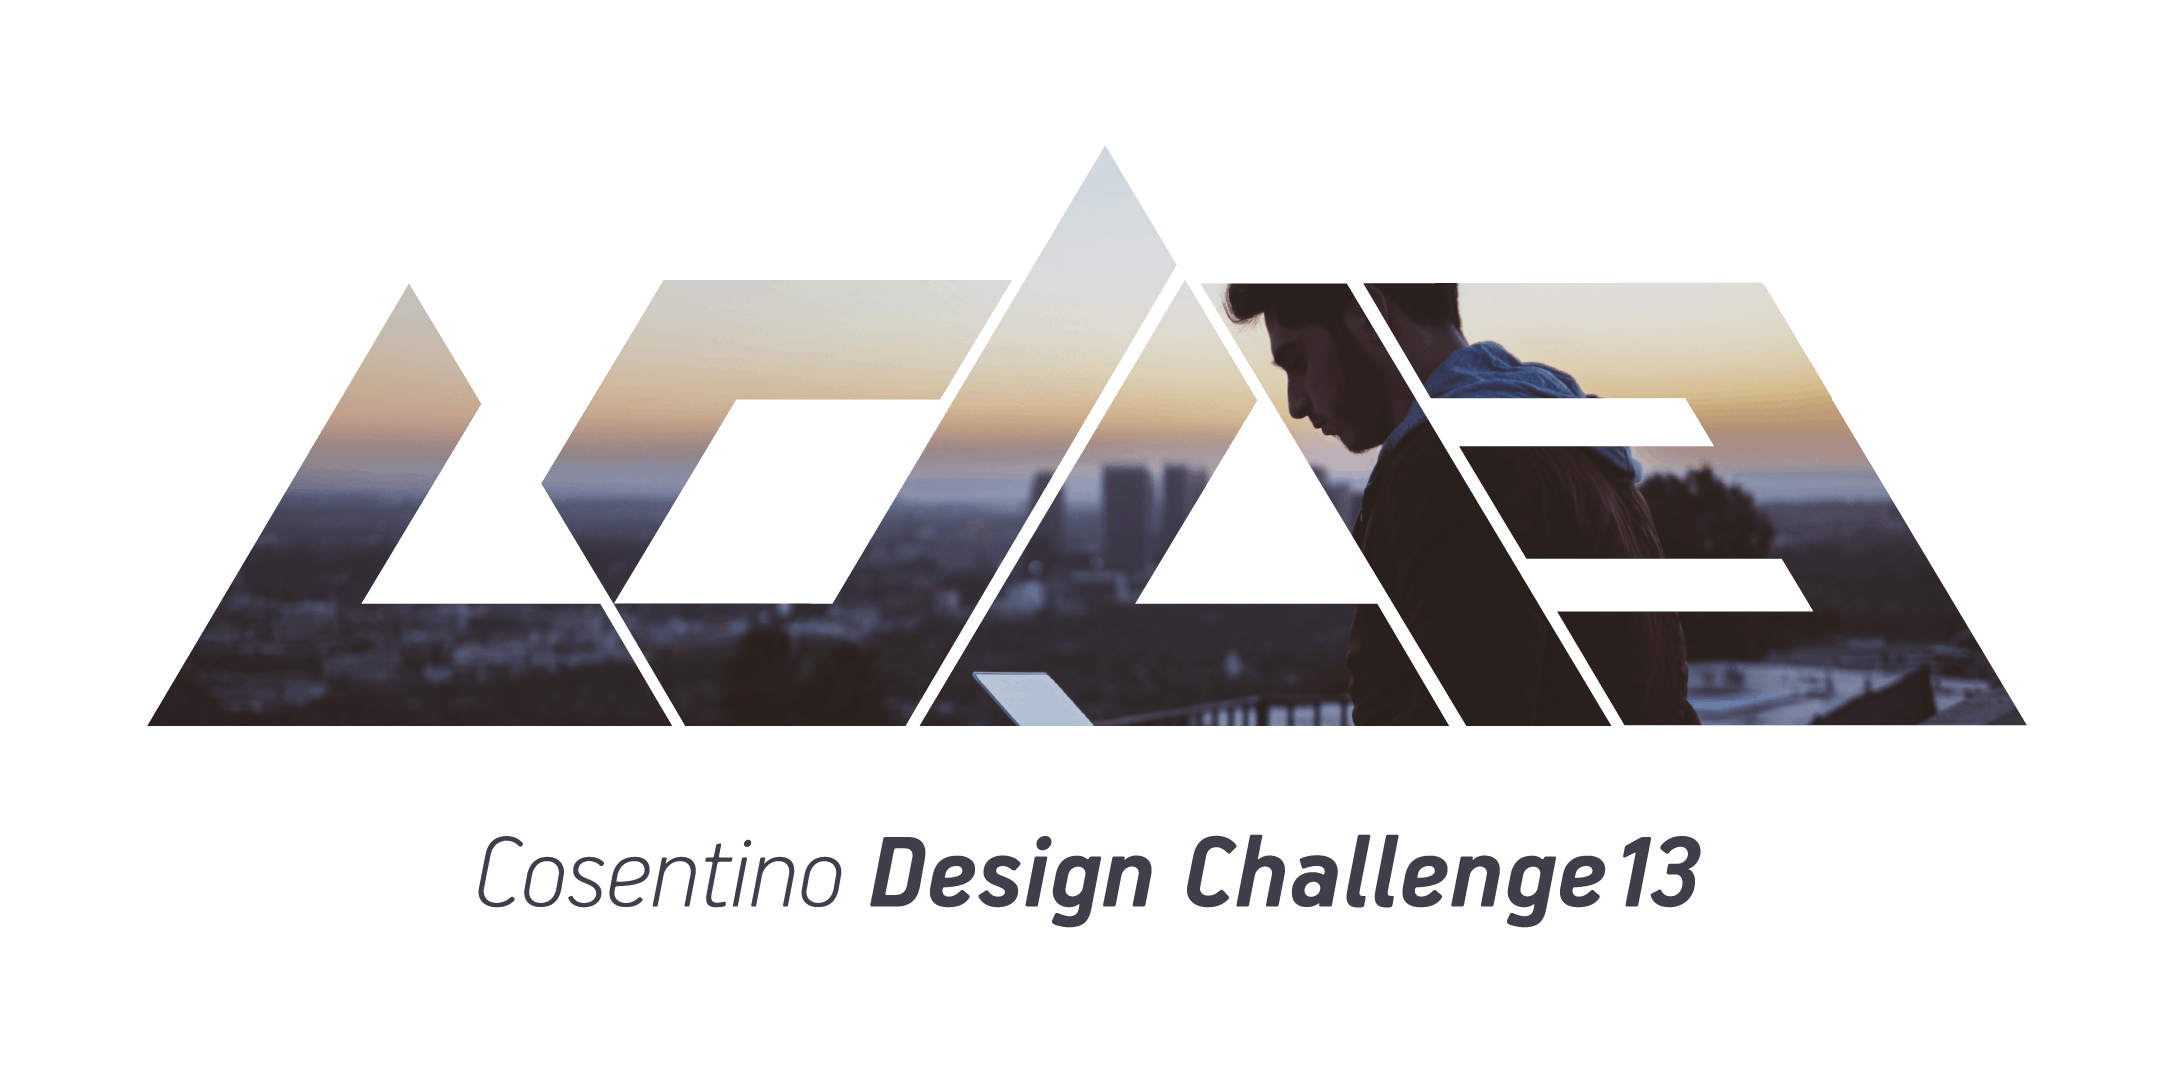 Image 31 of logocd13 imagen 1 in Cosentino Design Challenge 13 - Cosentino